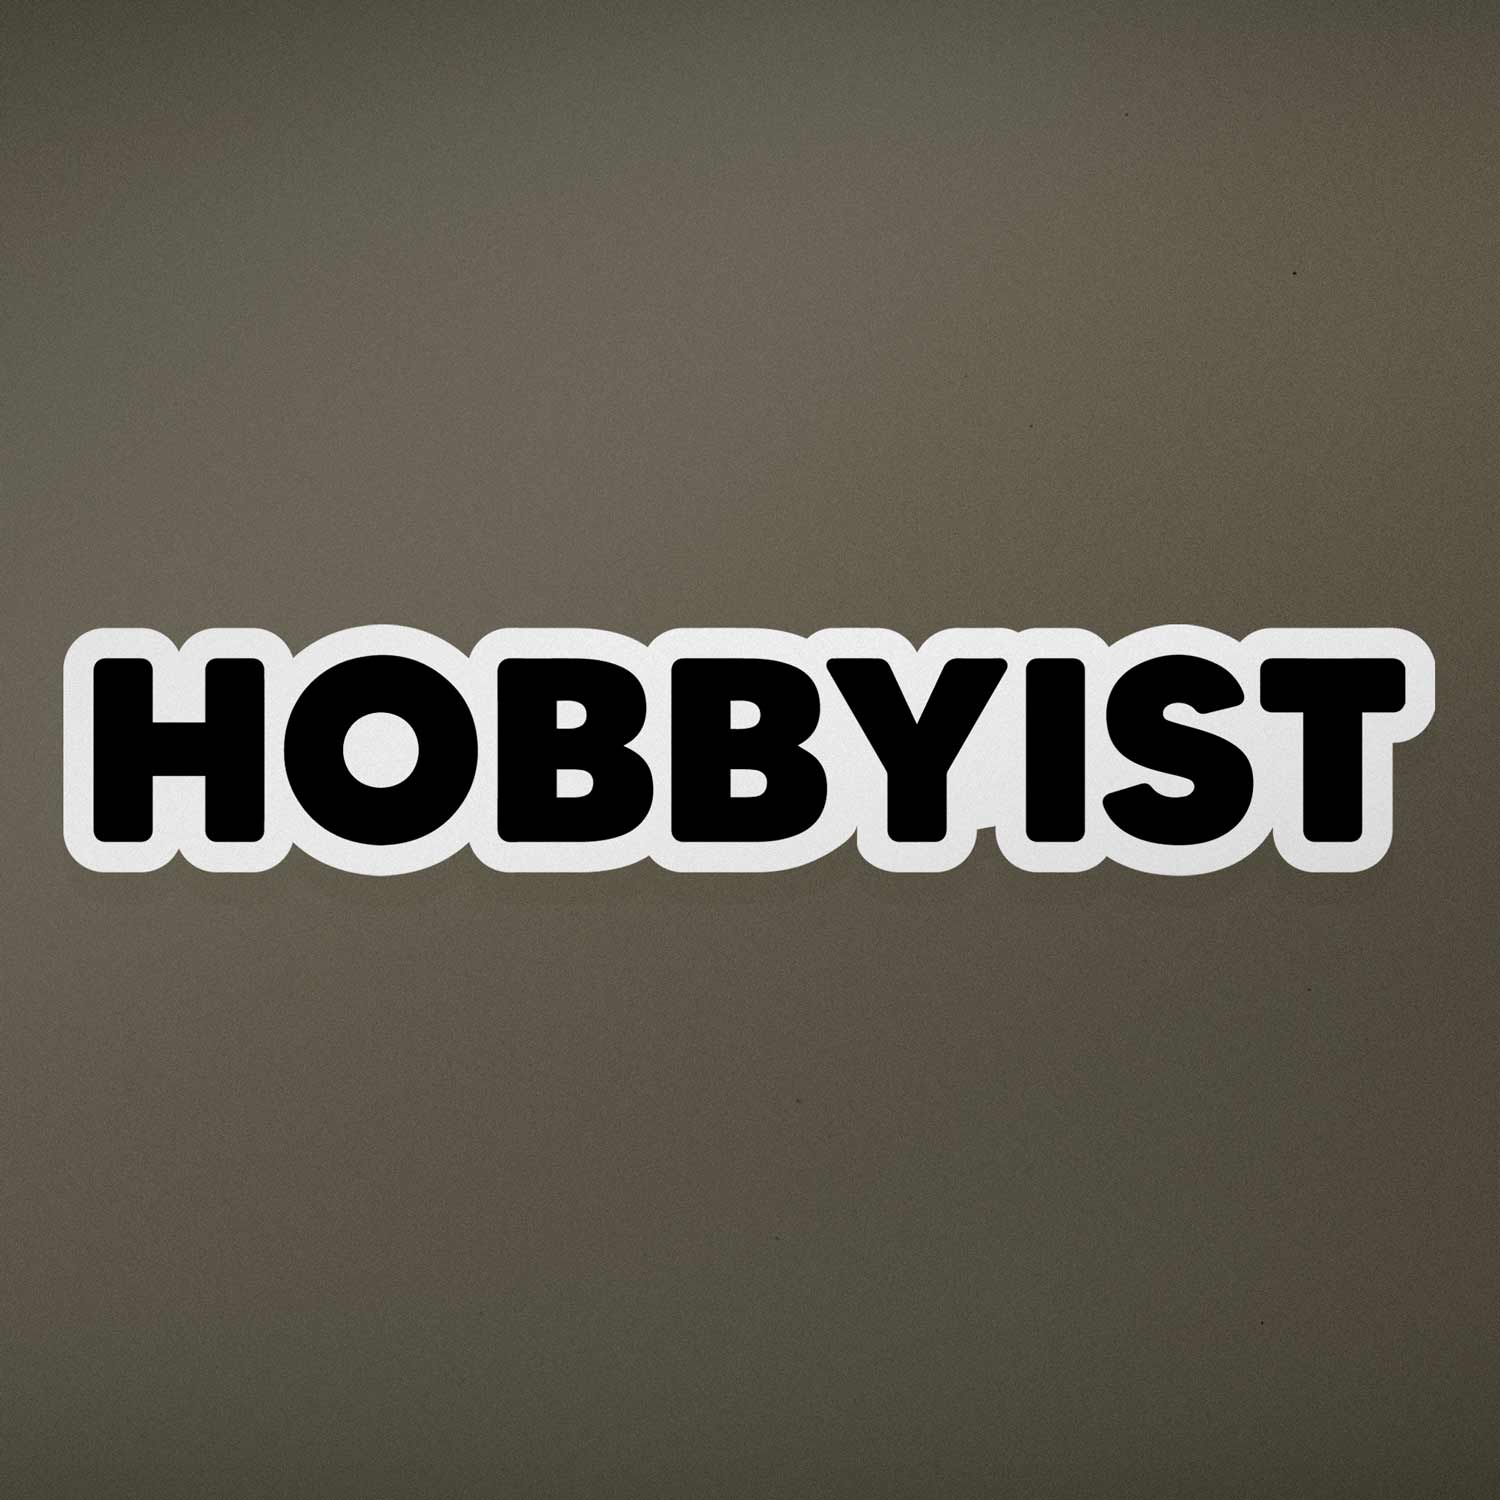 The Hobbyist Sticker